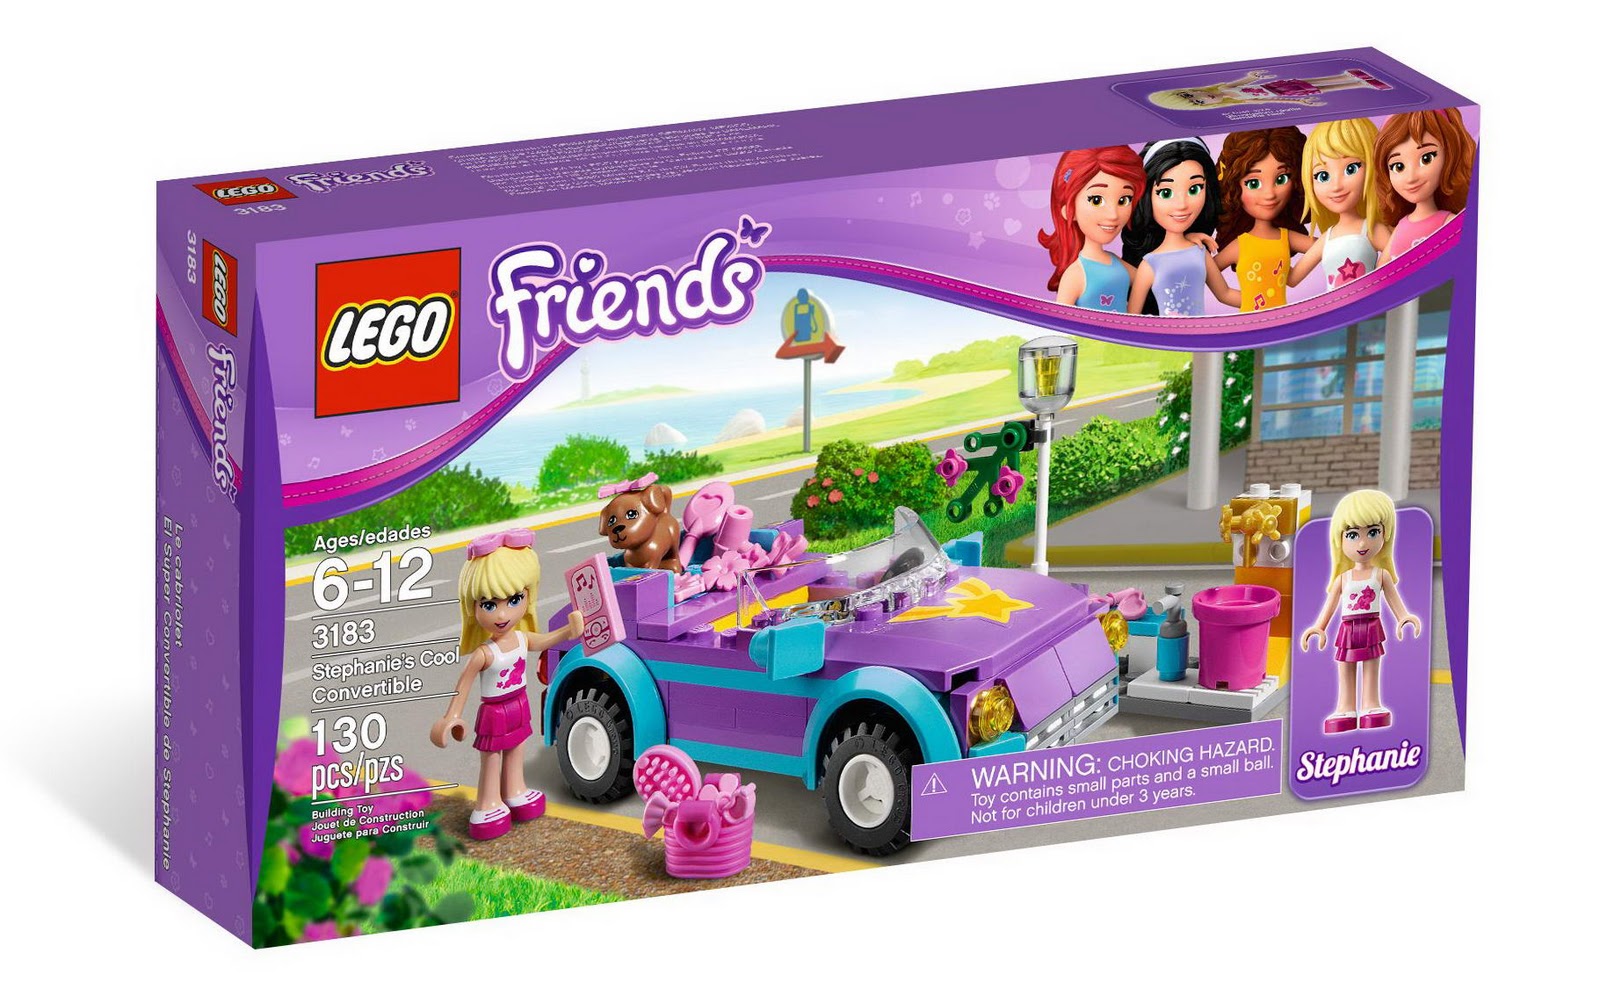 Brick Friends: LEGO Friends 3183 Stephanie’s Cool Convertible